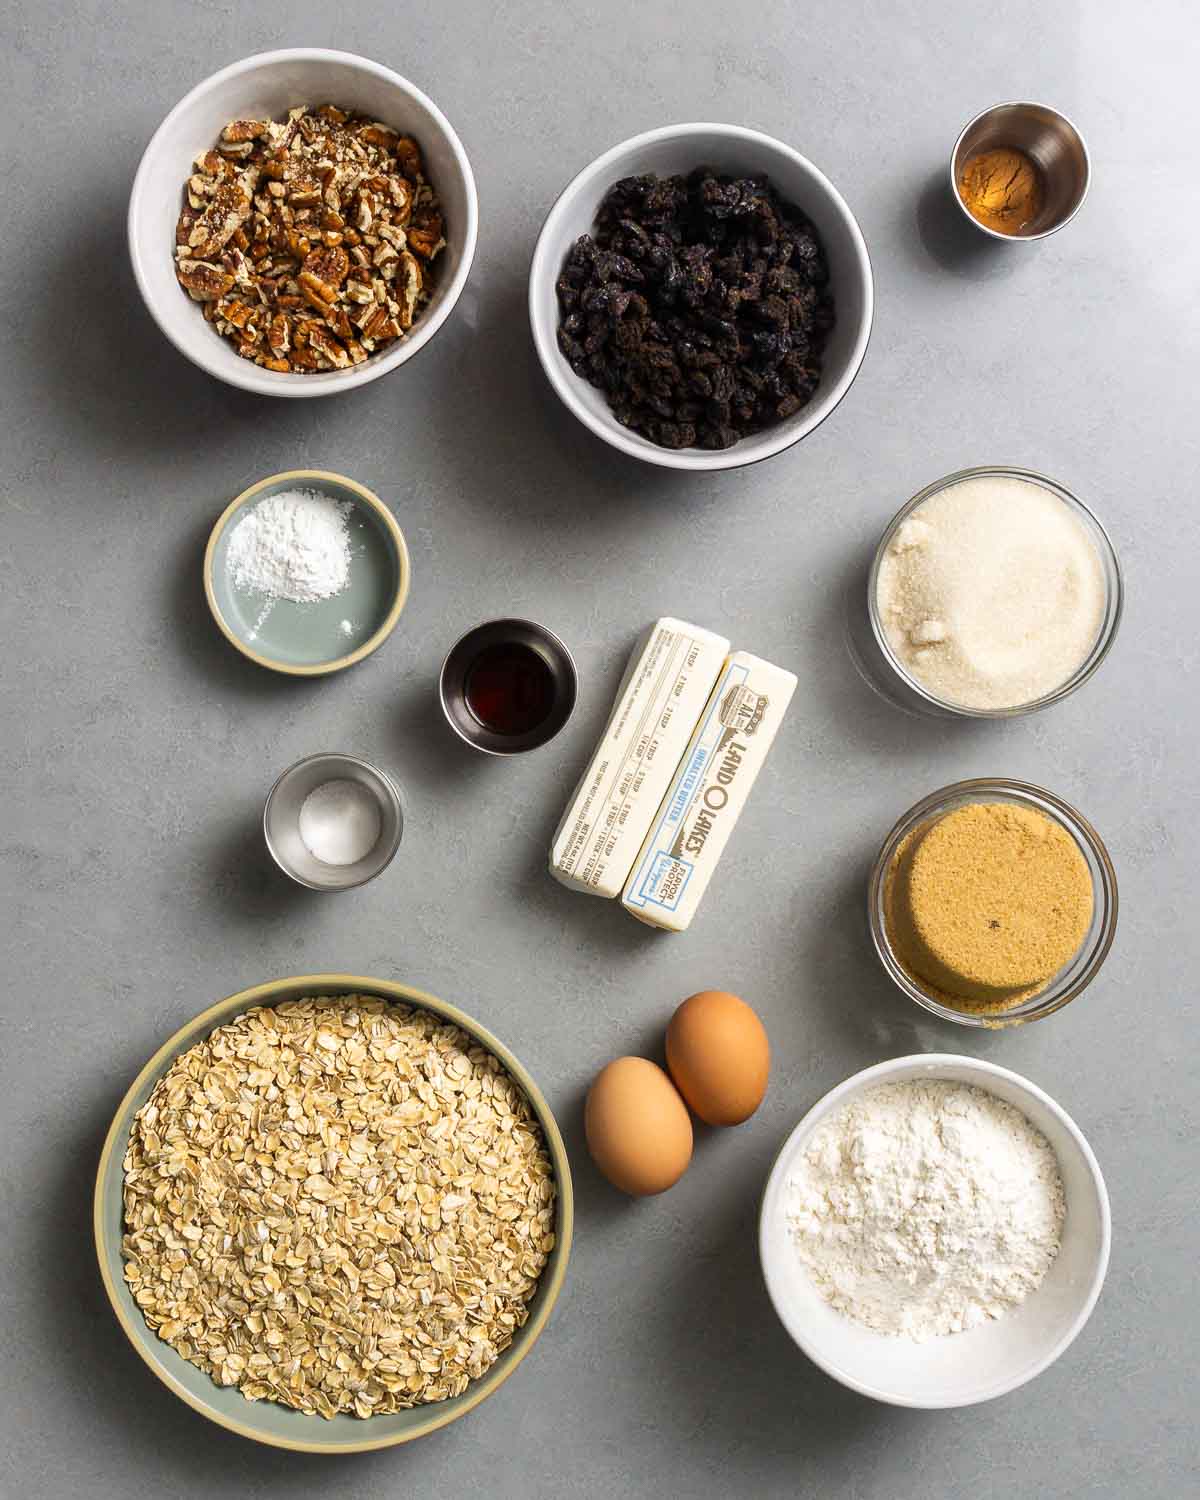 Ingredients shown: pecans, raisins, cinnamon, baking powder, vanilla, salt, butter, sugar, brown, saugar, oats, eggs, and flour.